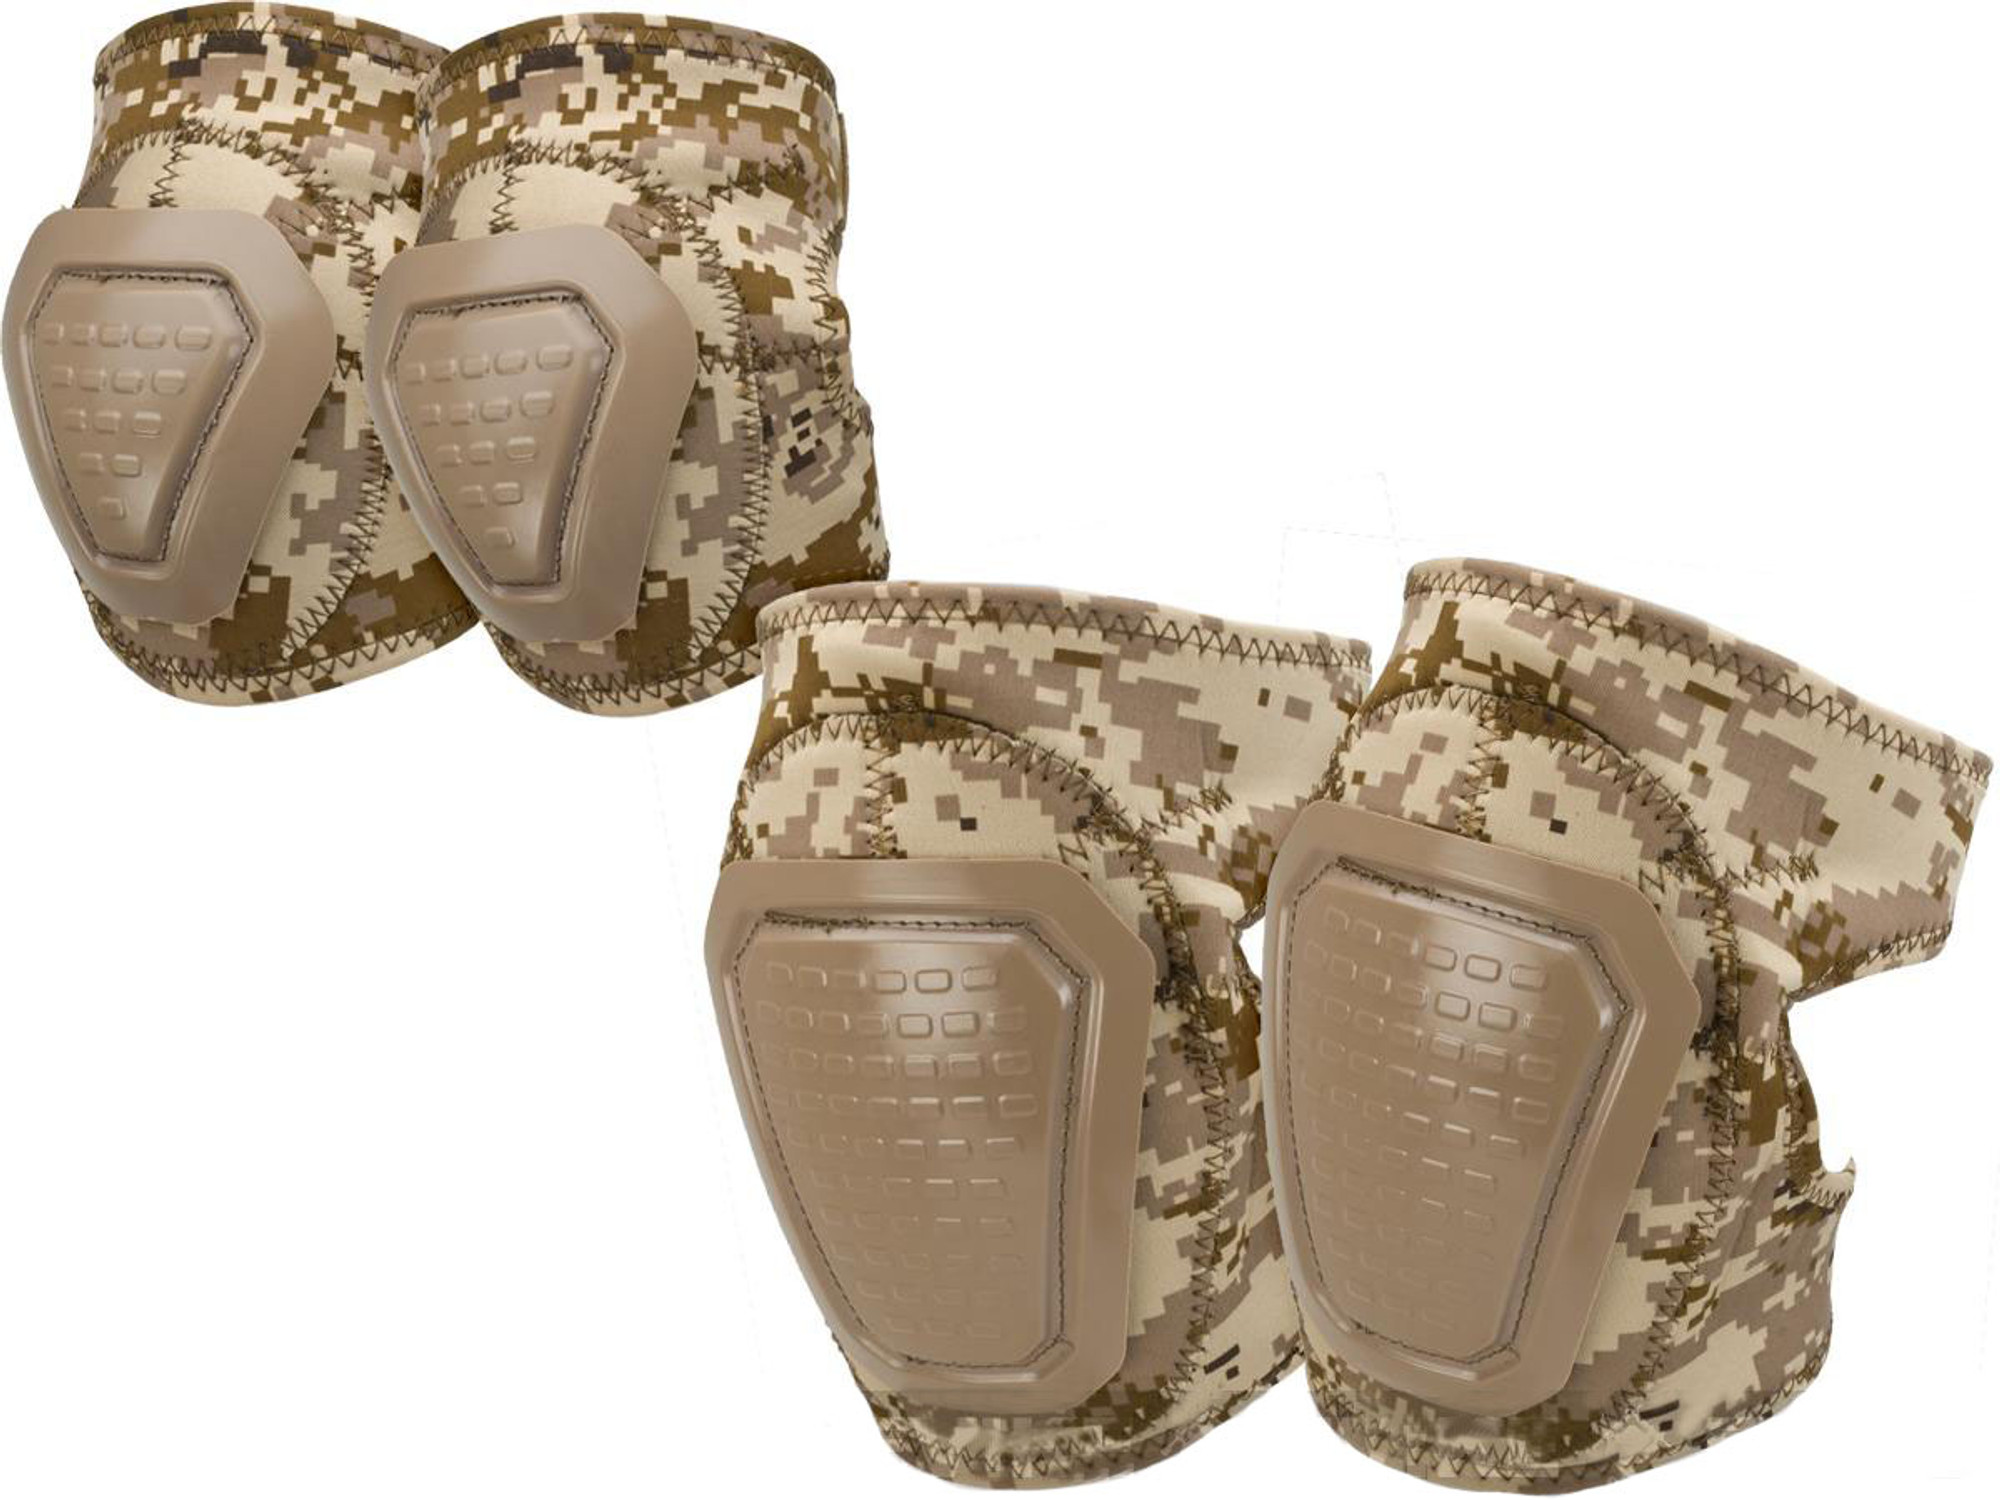 Matrix Bravo Advanced Neoprene Tactical Knee and Elbow Pad Set (Color: Digital Desert)